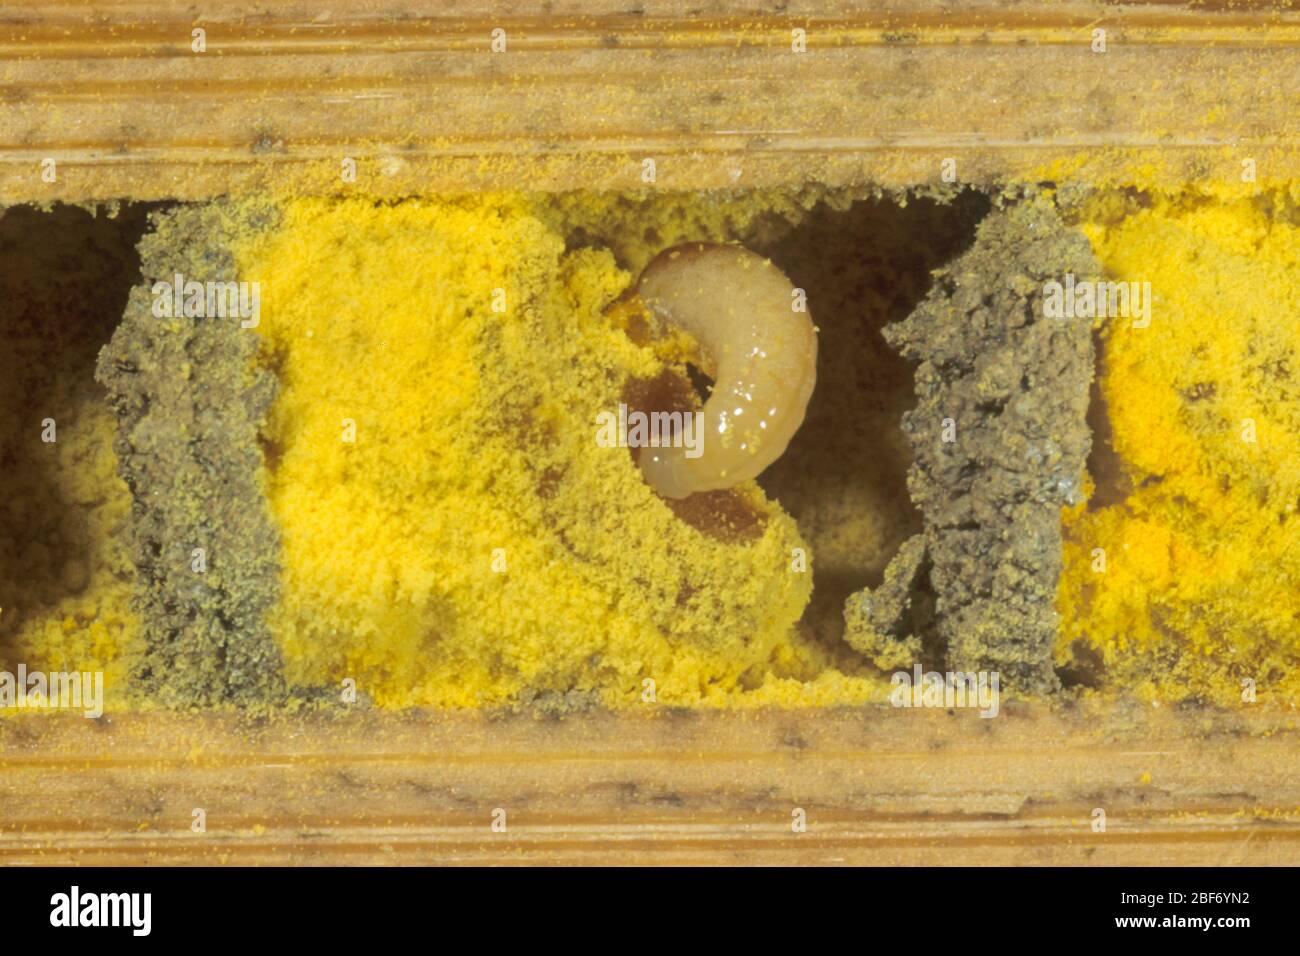 Abeja de masón rojo (Osmia rufa, Osmia bicornis), vista transversal de un tubo de cría con larva y polen, Alemania Foto de stock